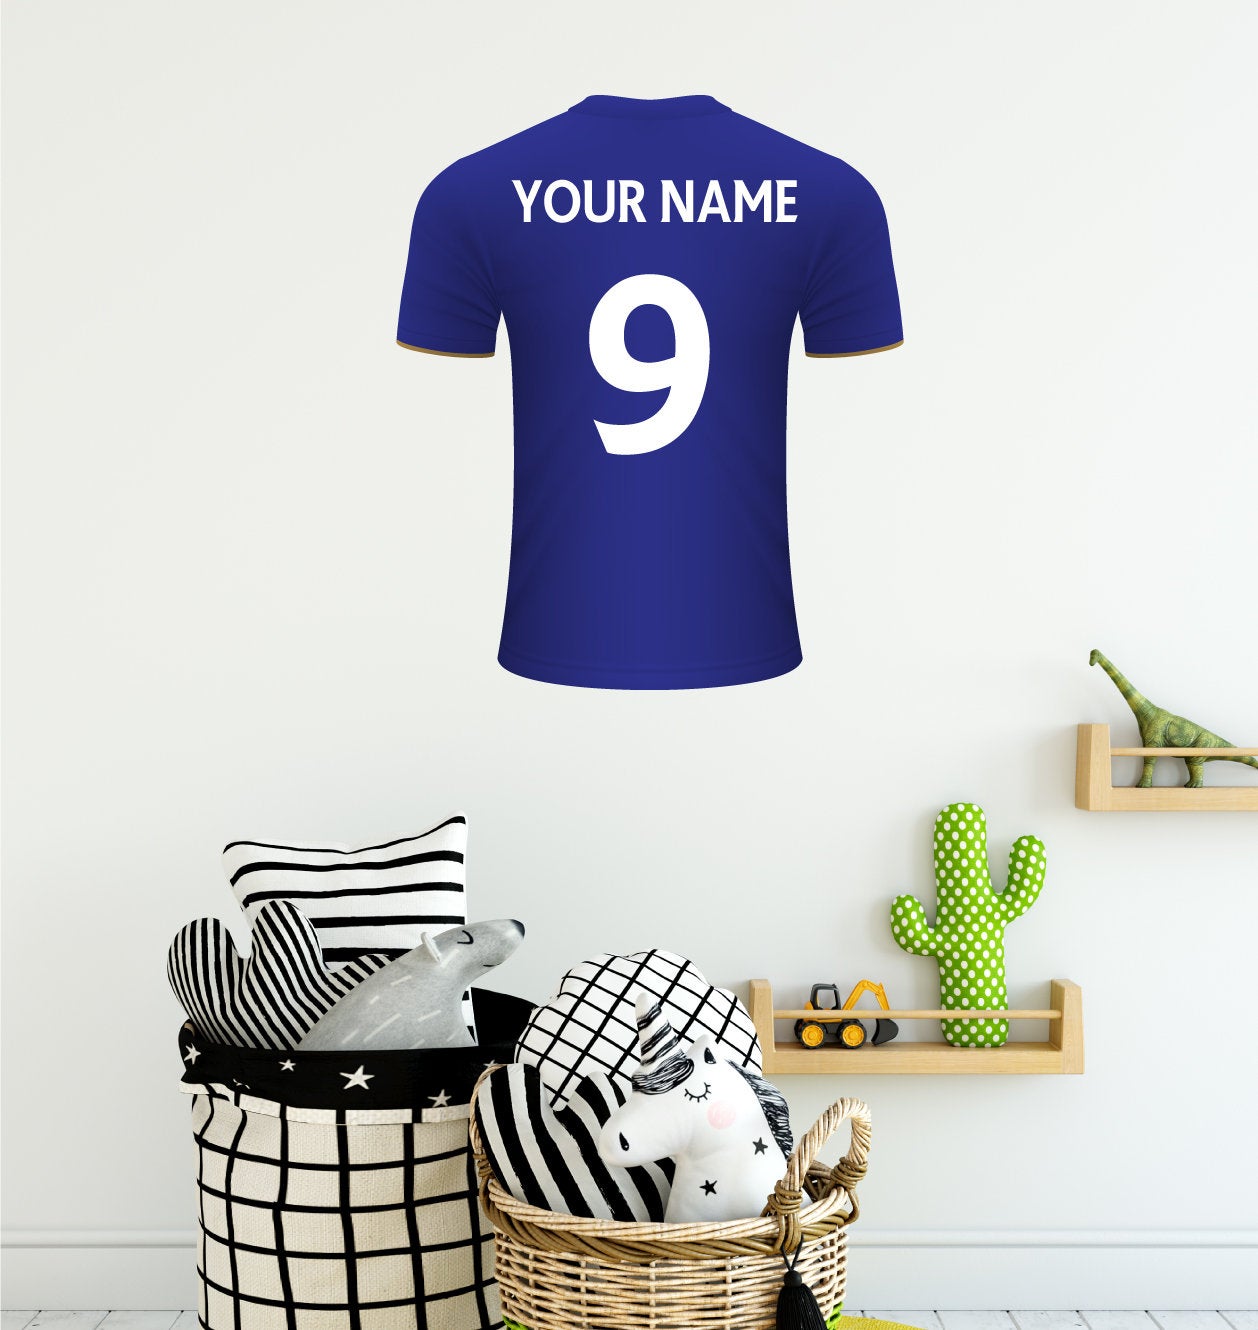 Blue Personalised Football Shirt Wall Sticker